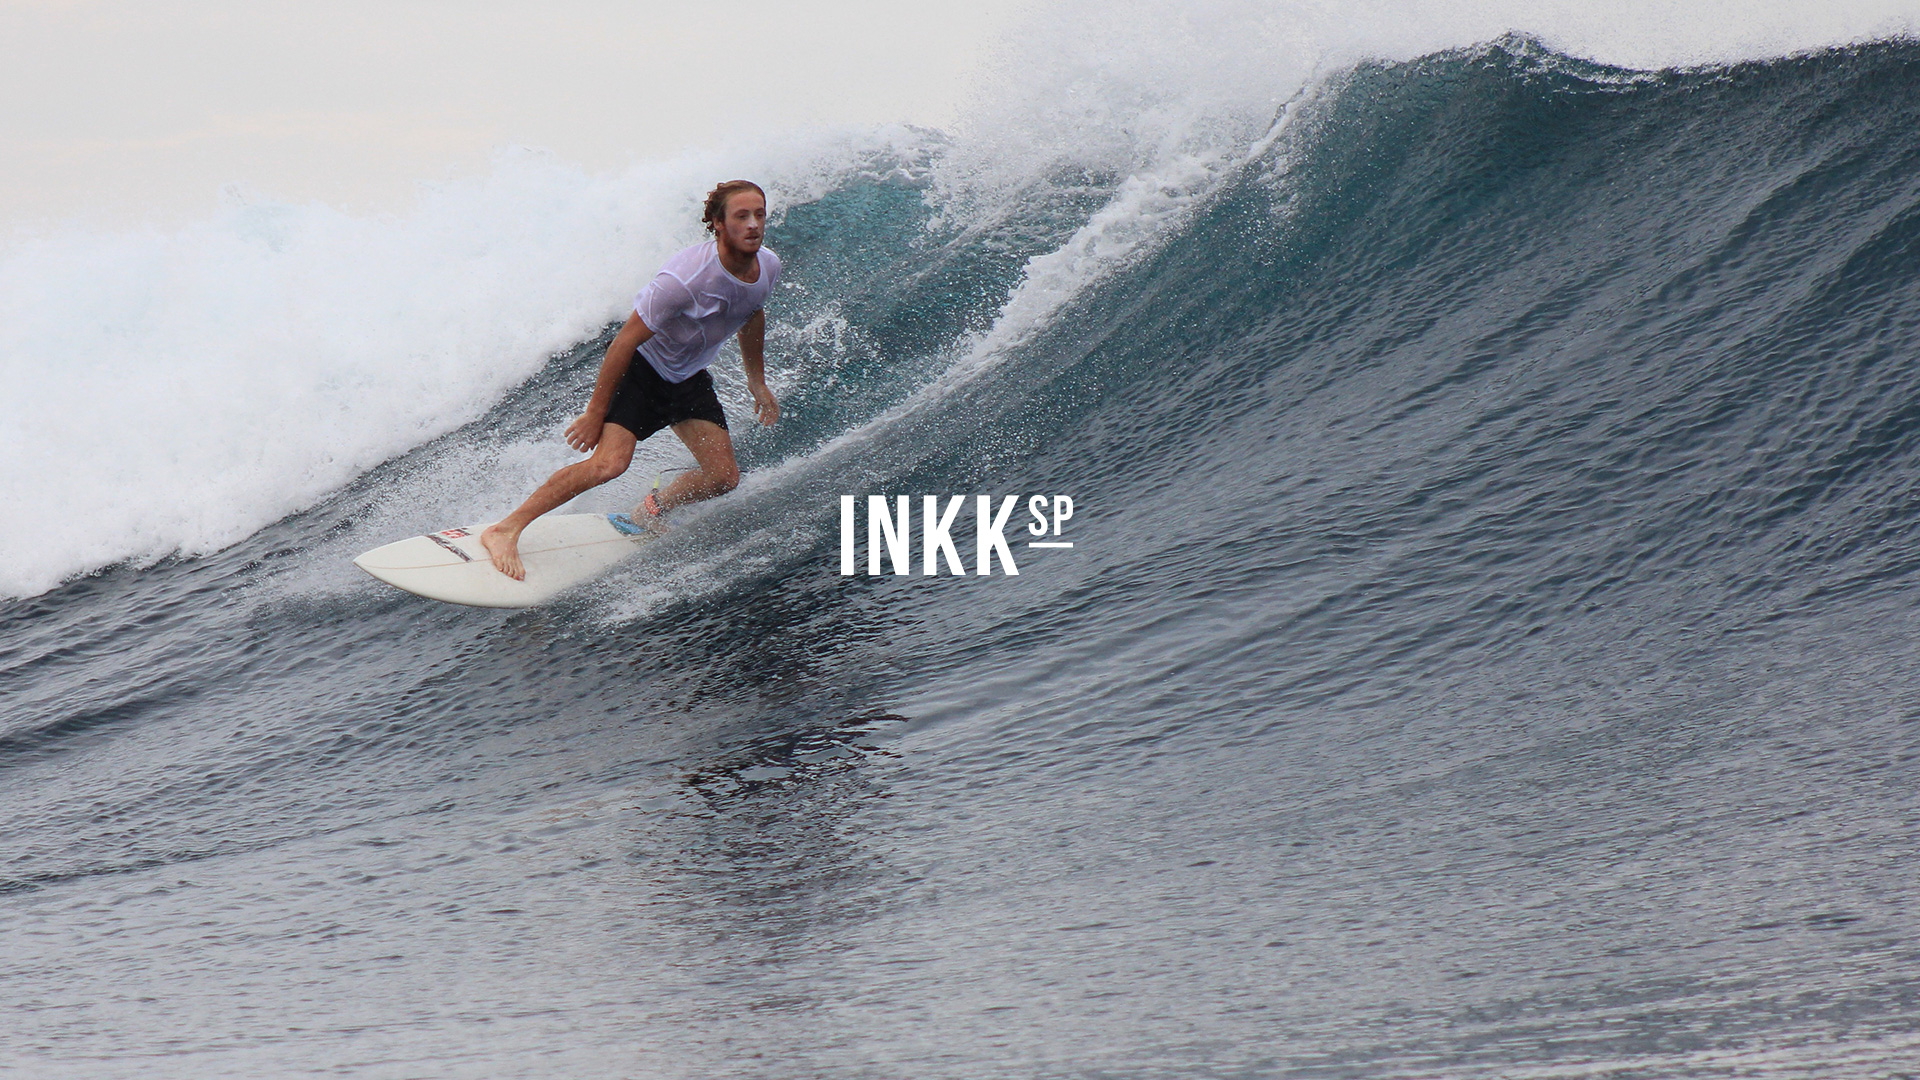 INKKsp — Logo on surfing image